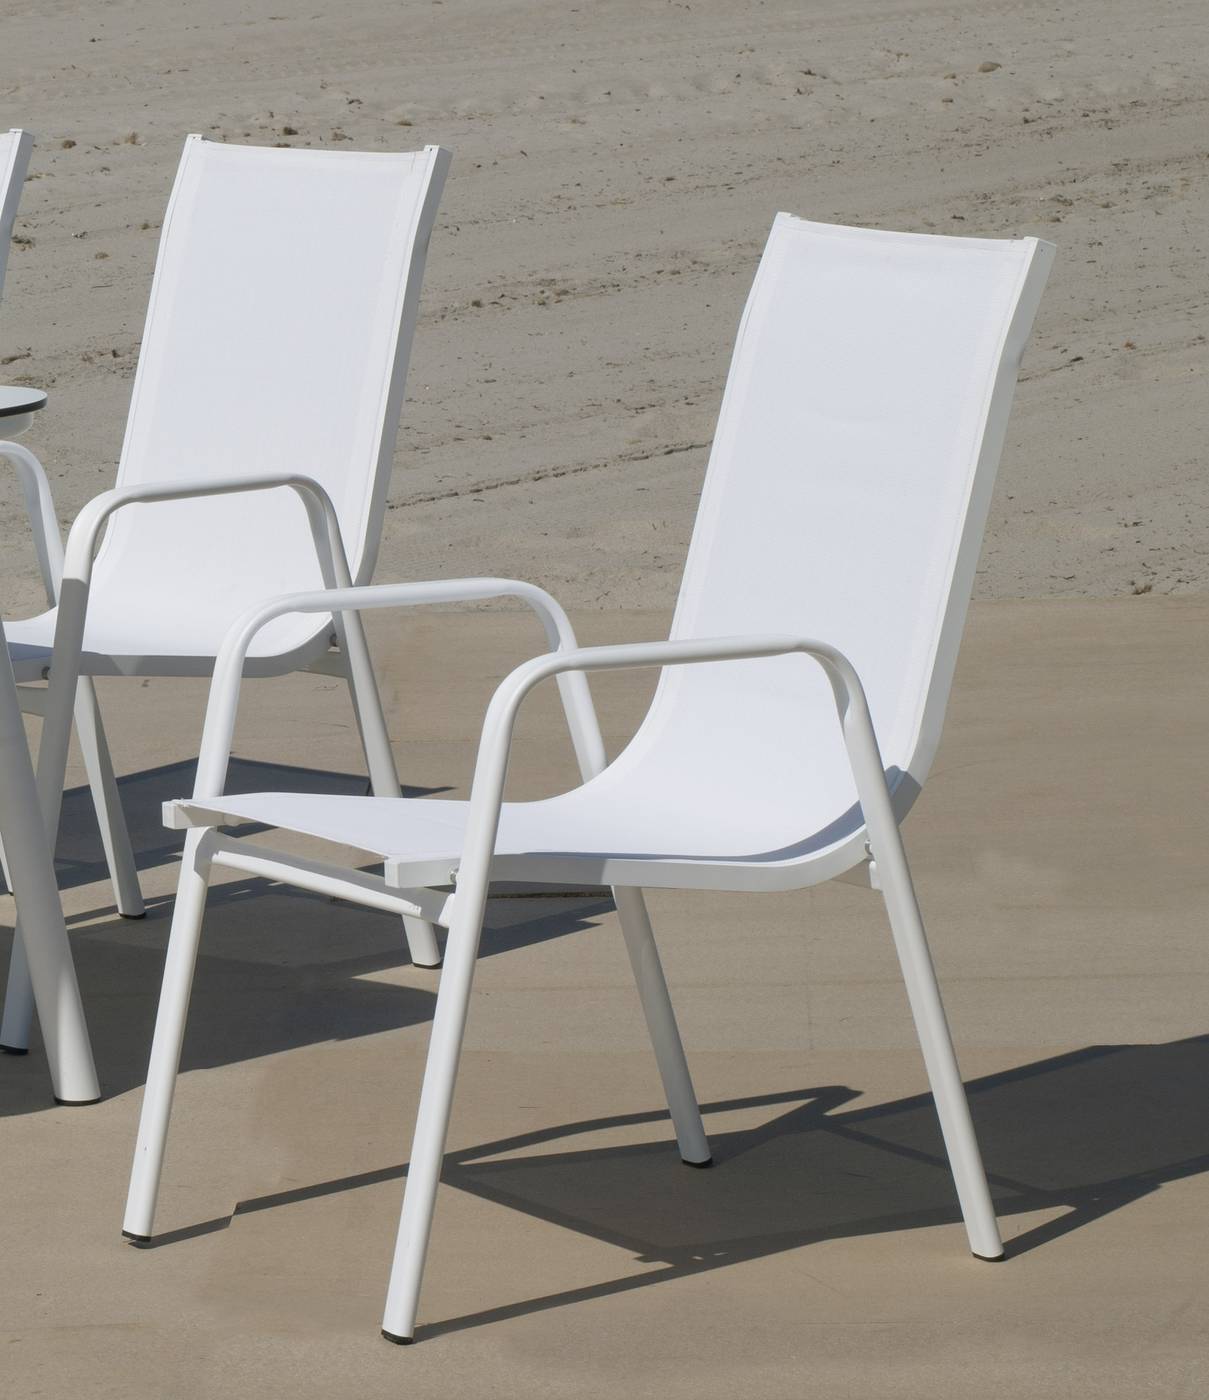 Conjunto Aluminio Avalon - Conjunto aluminio: 1 sofá 2 plazas + 2 sillones + 1 mesa de centro + cojines. De color blanco o antracita.